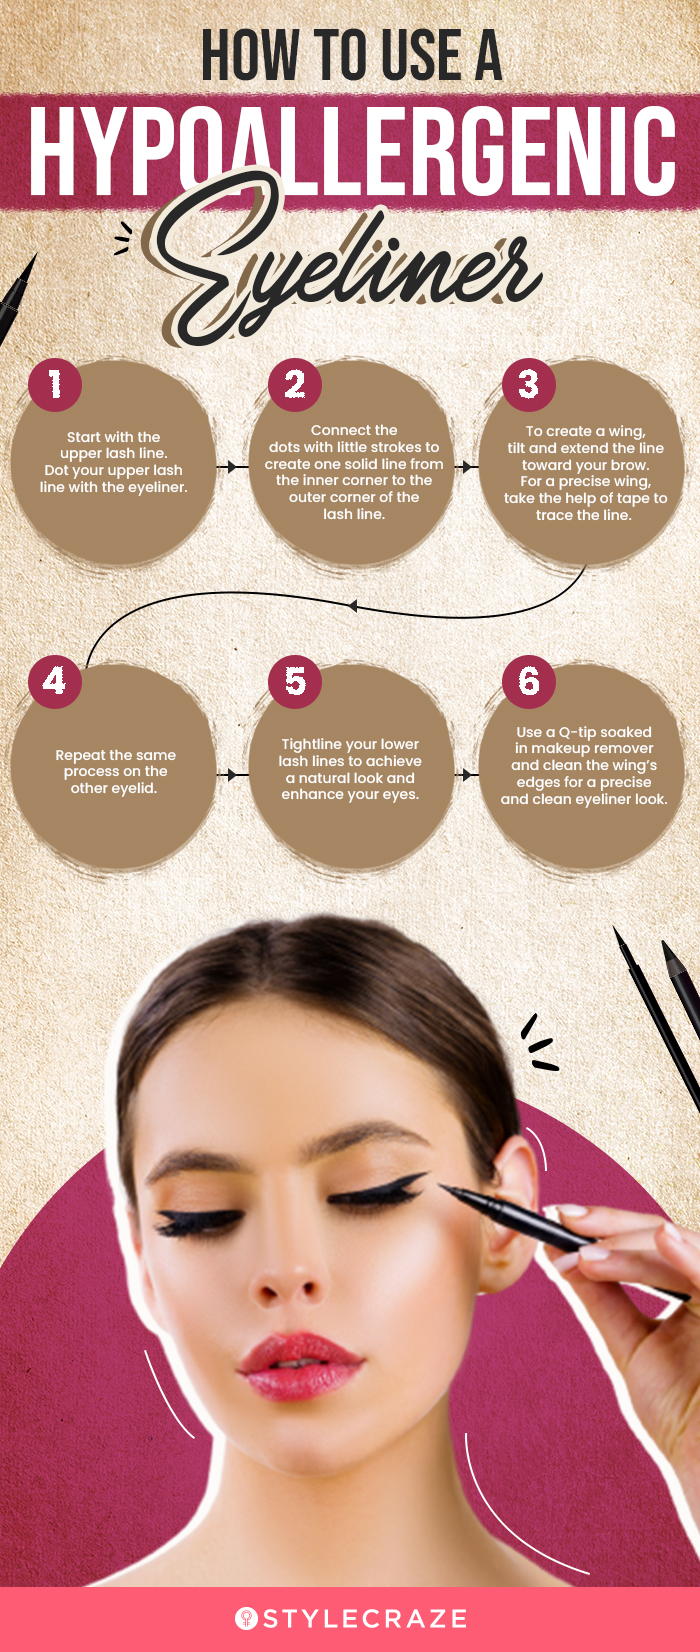 How To Apply Hypoallergenic Eyeliner (infographic)